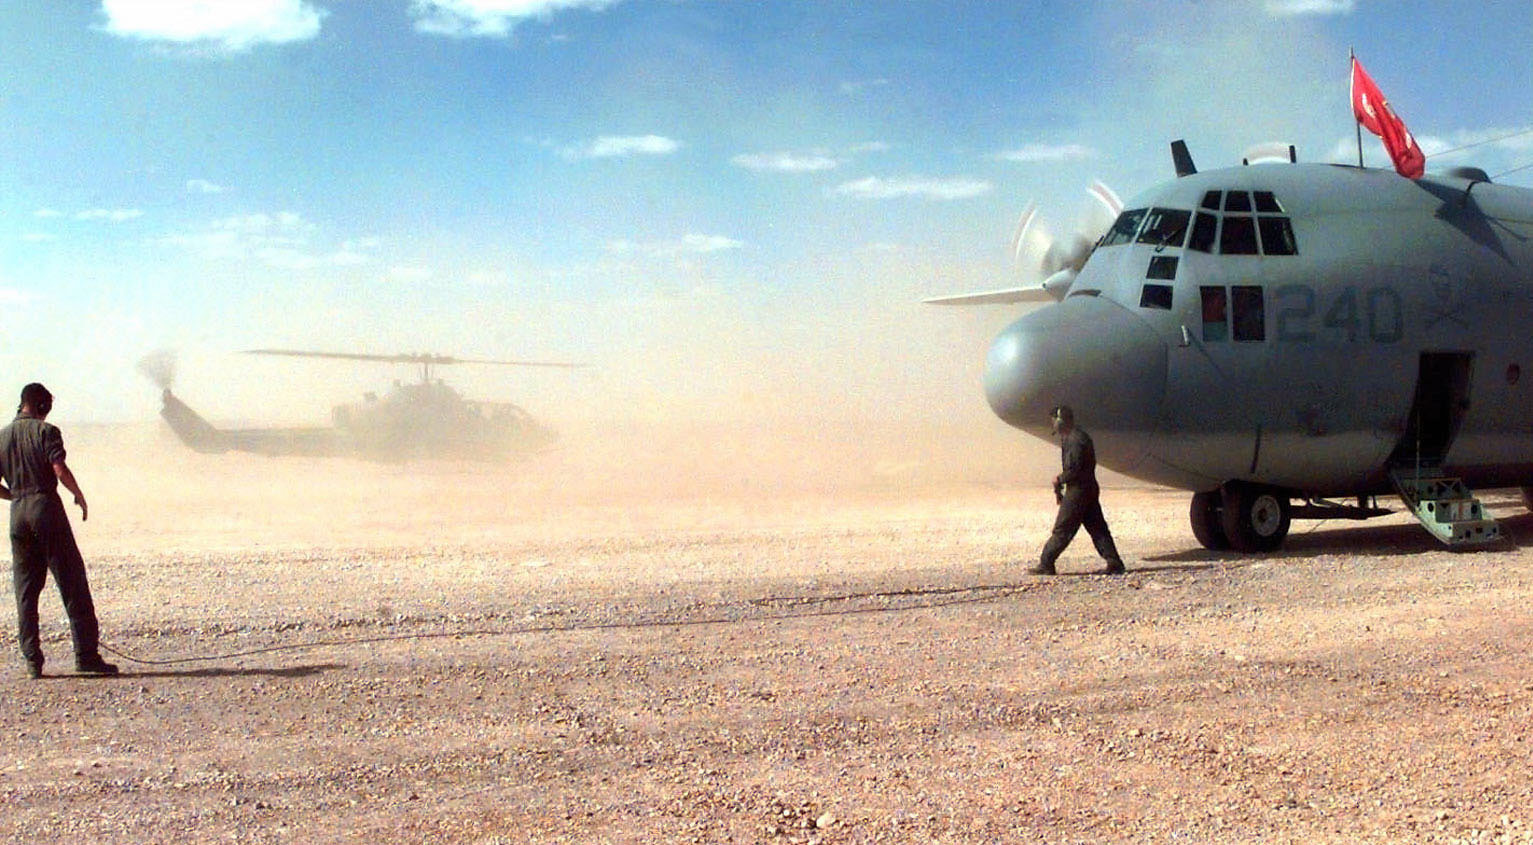 a plane on a desert plain next to some men